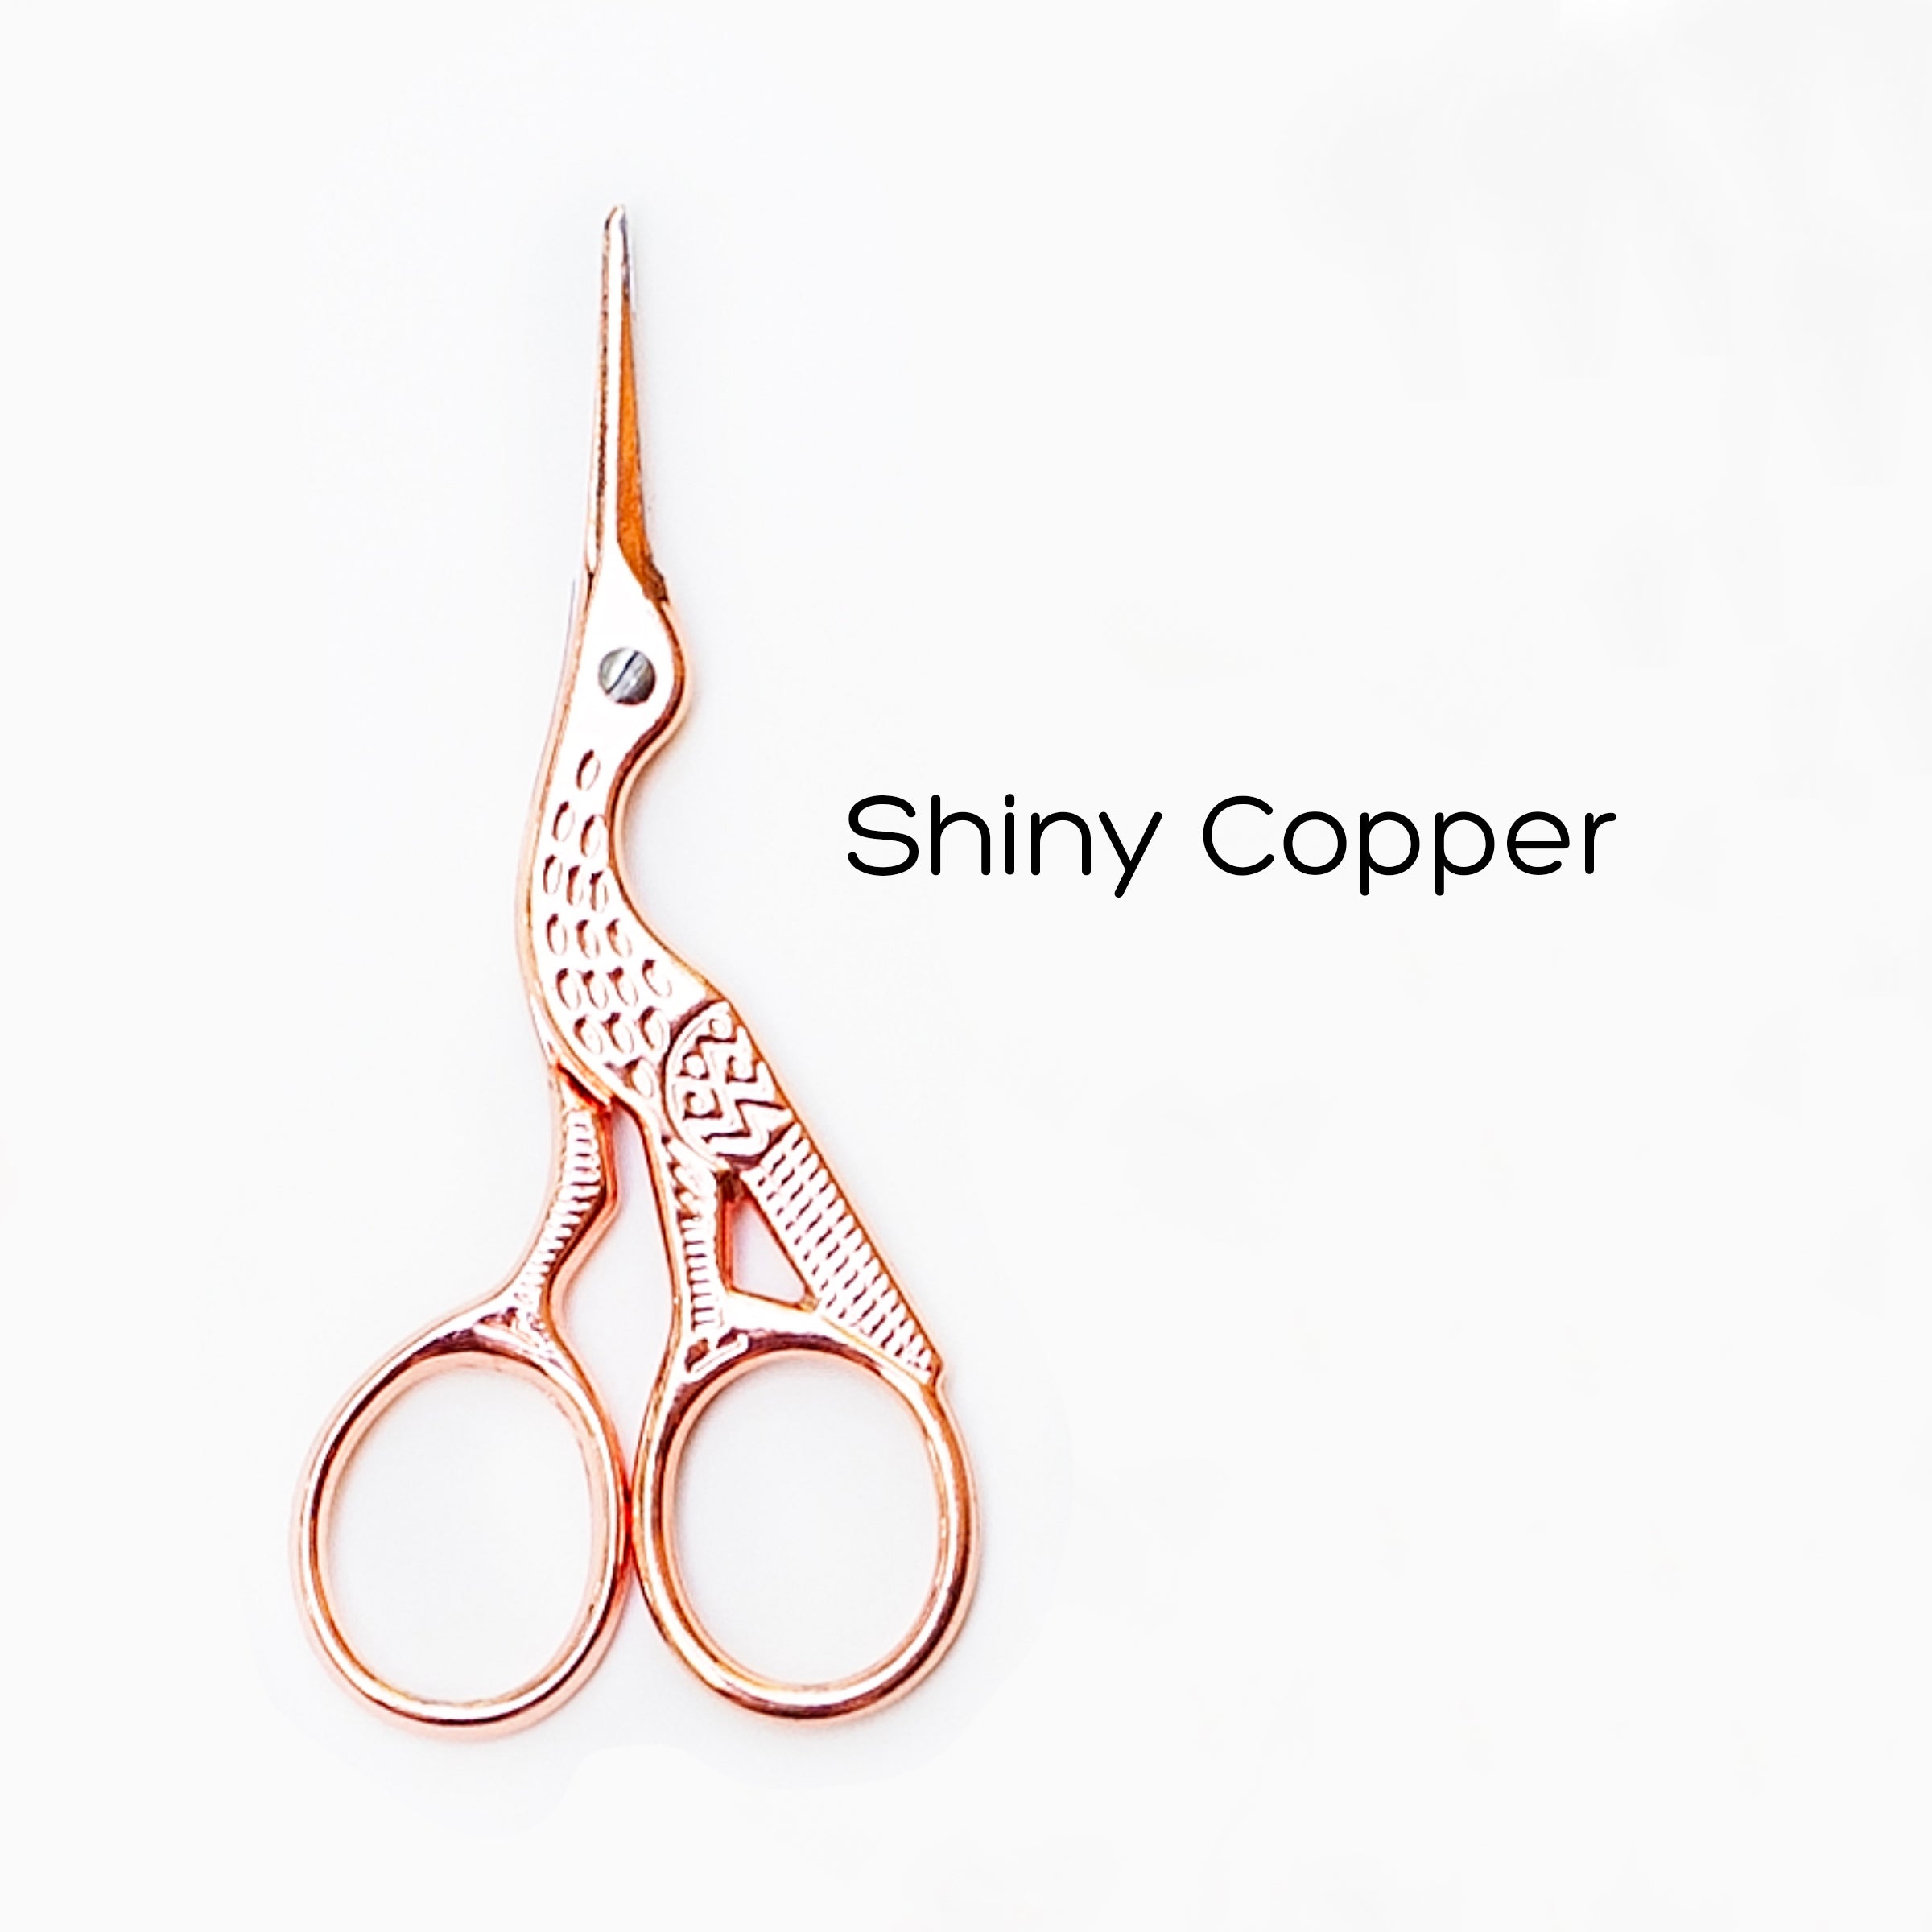 Scissors - Pink Victorian Embroidery Scissors with Sheath – Lolli